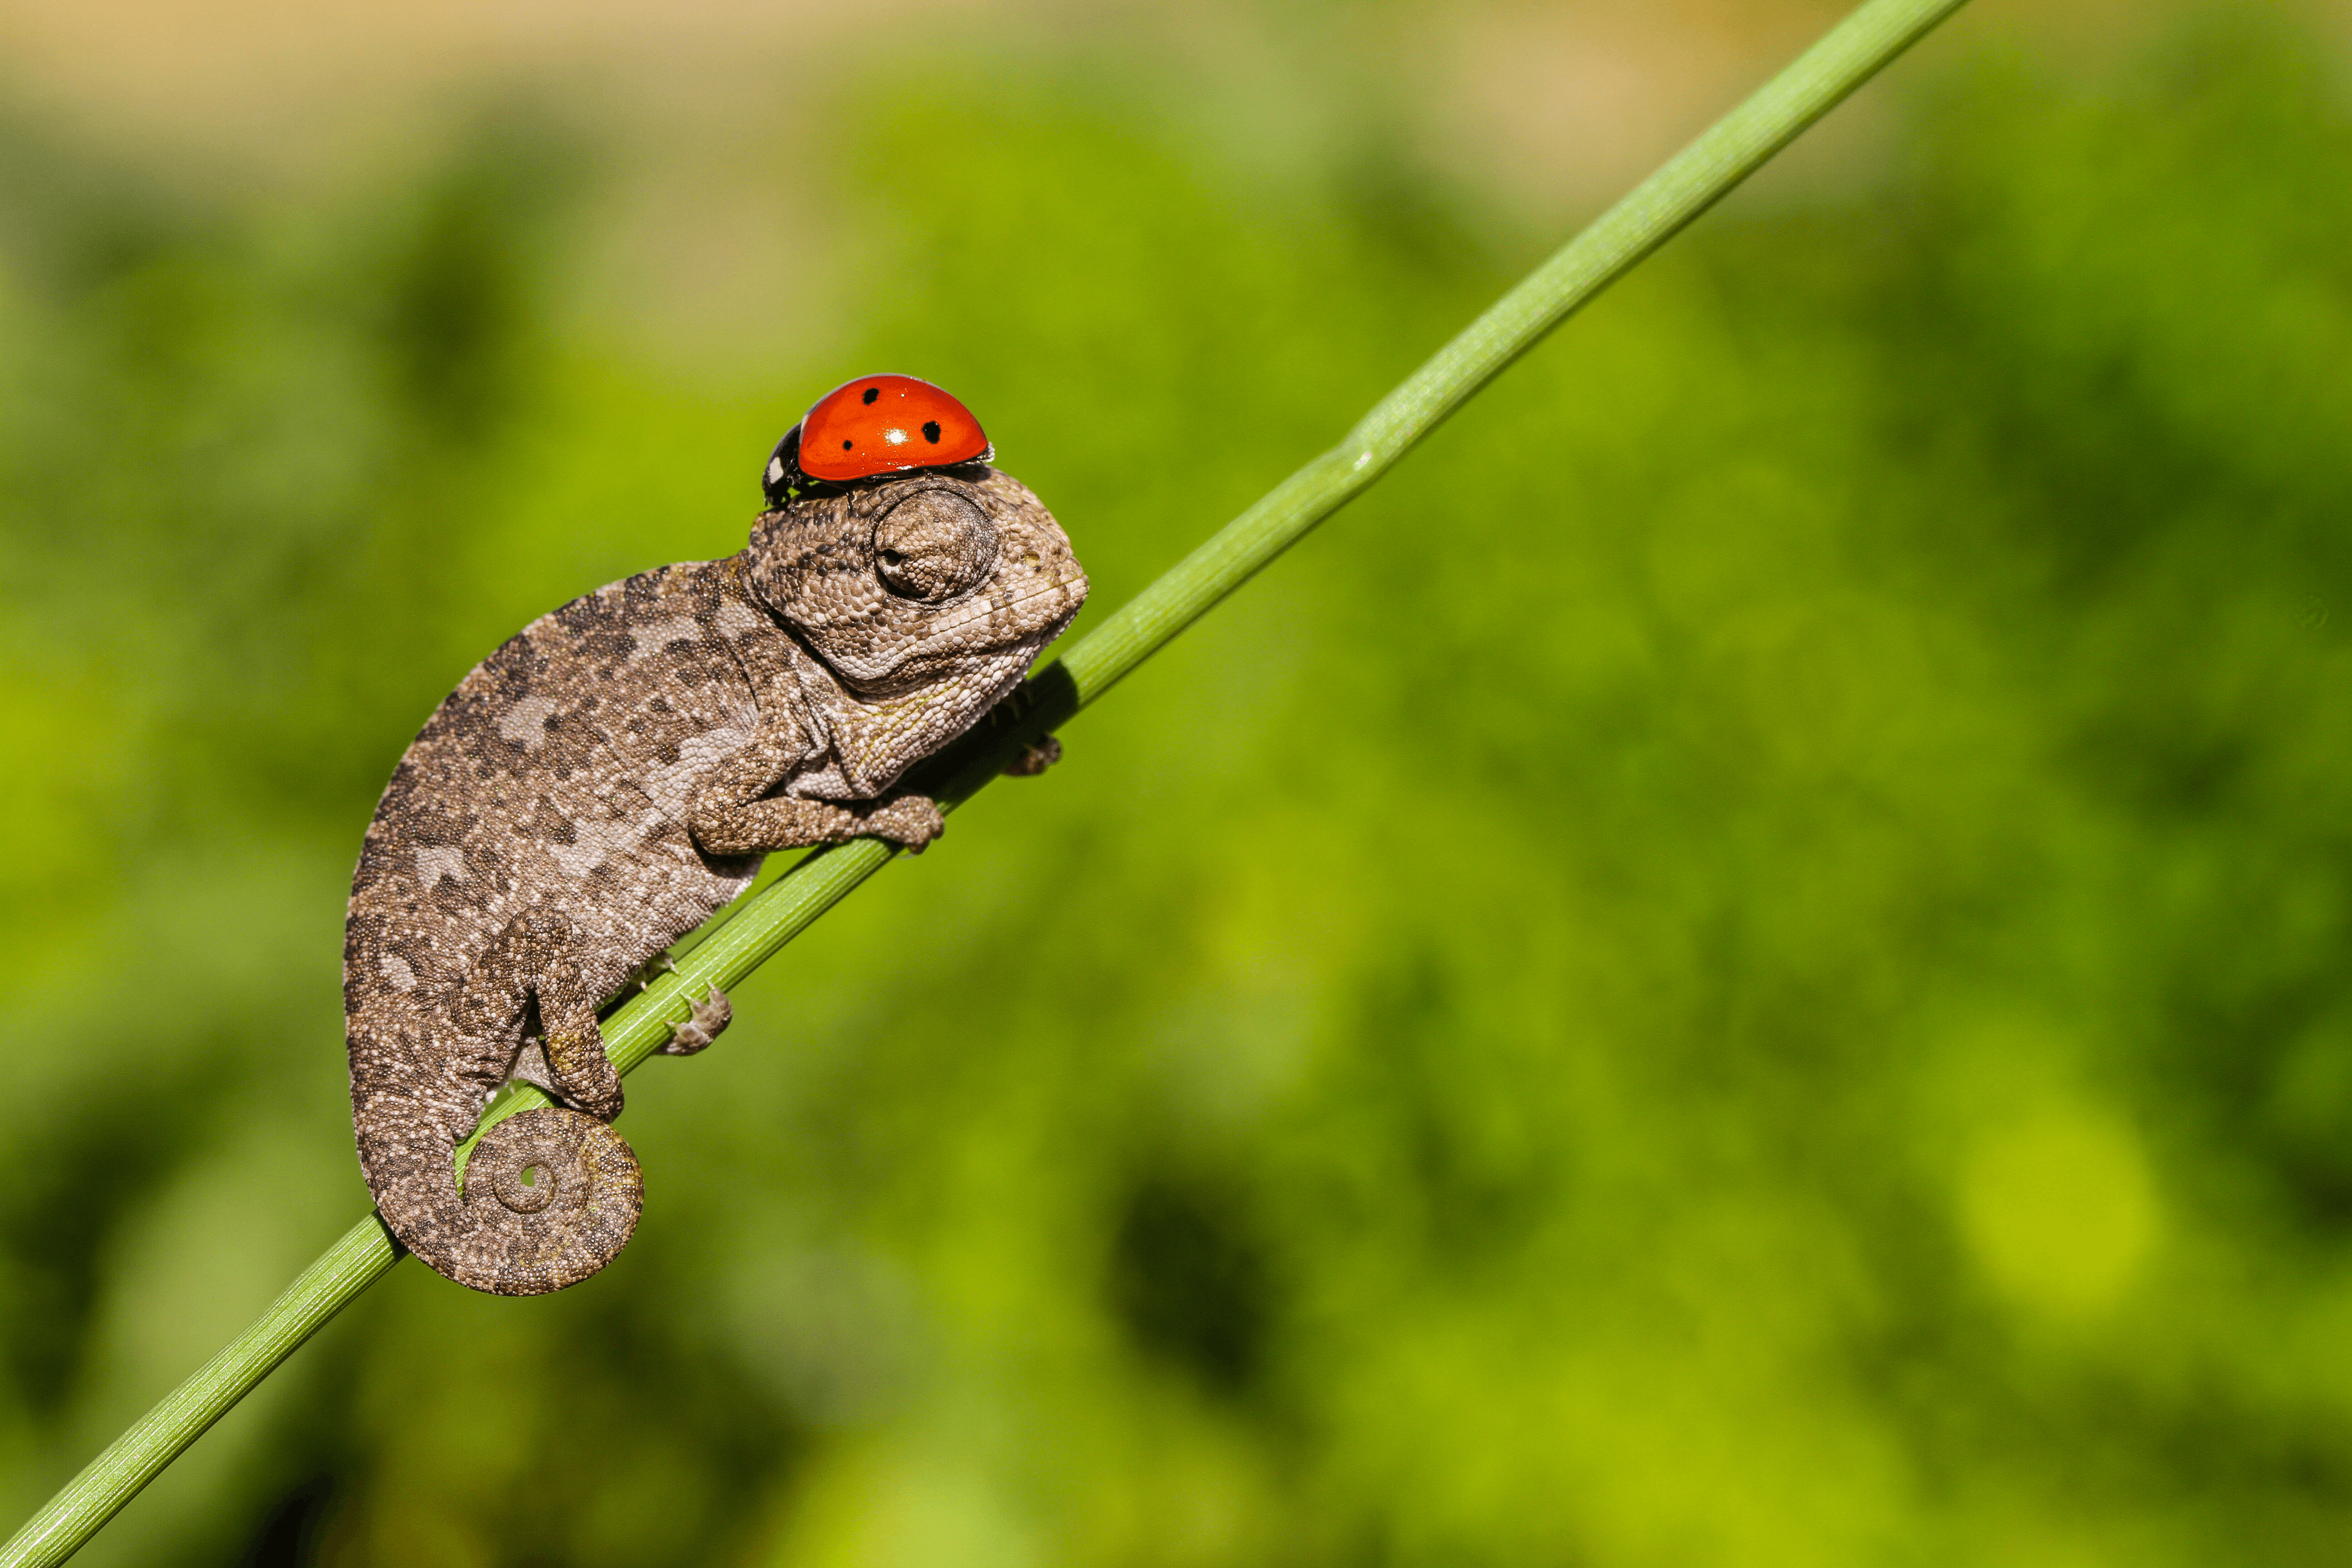 A chameleon wearing a ladybug hat